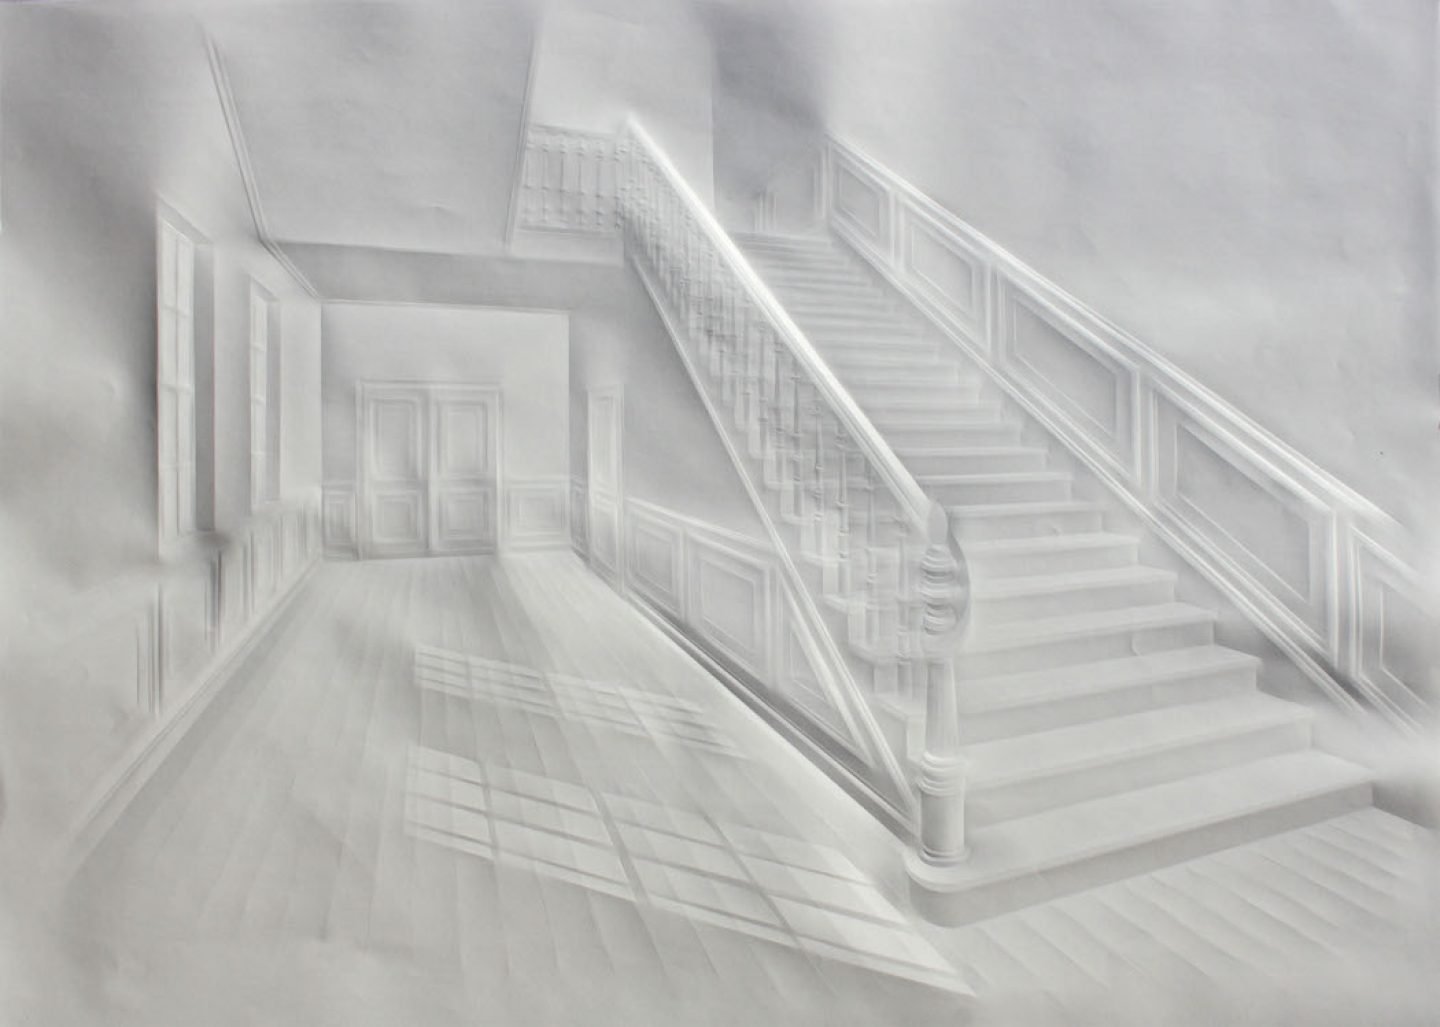 simonschubert(Light in hall with stair),70x100cm,2014